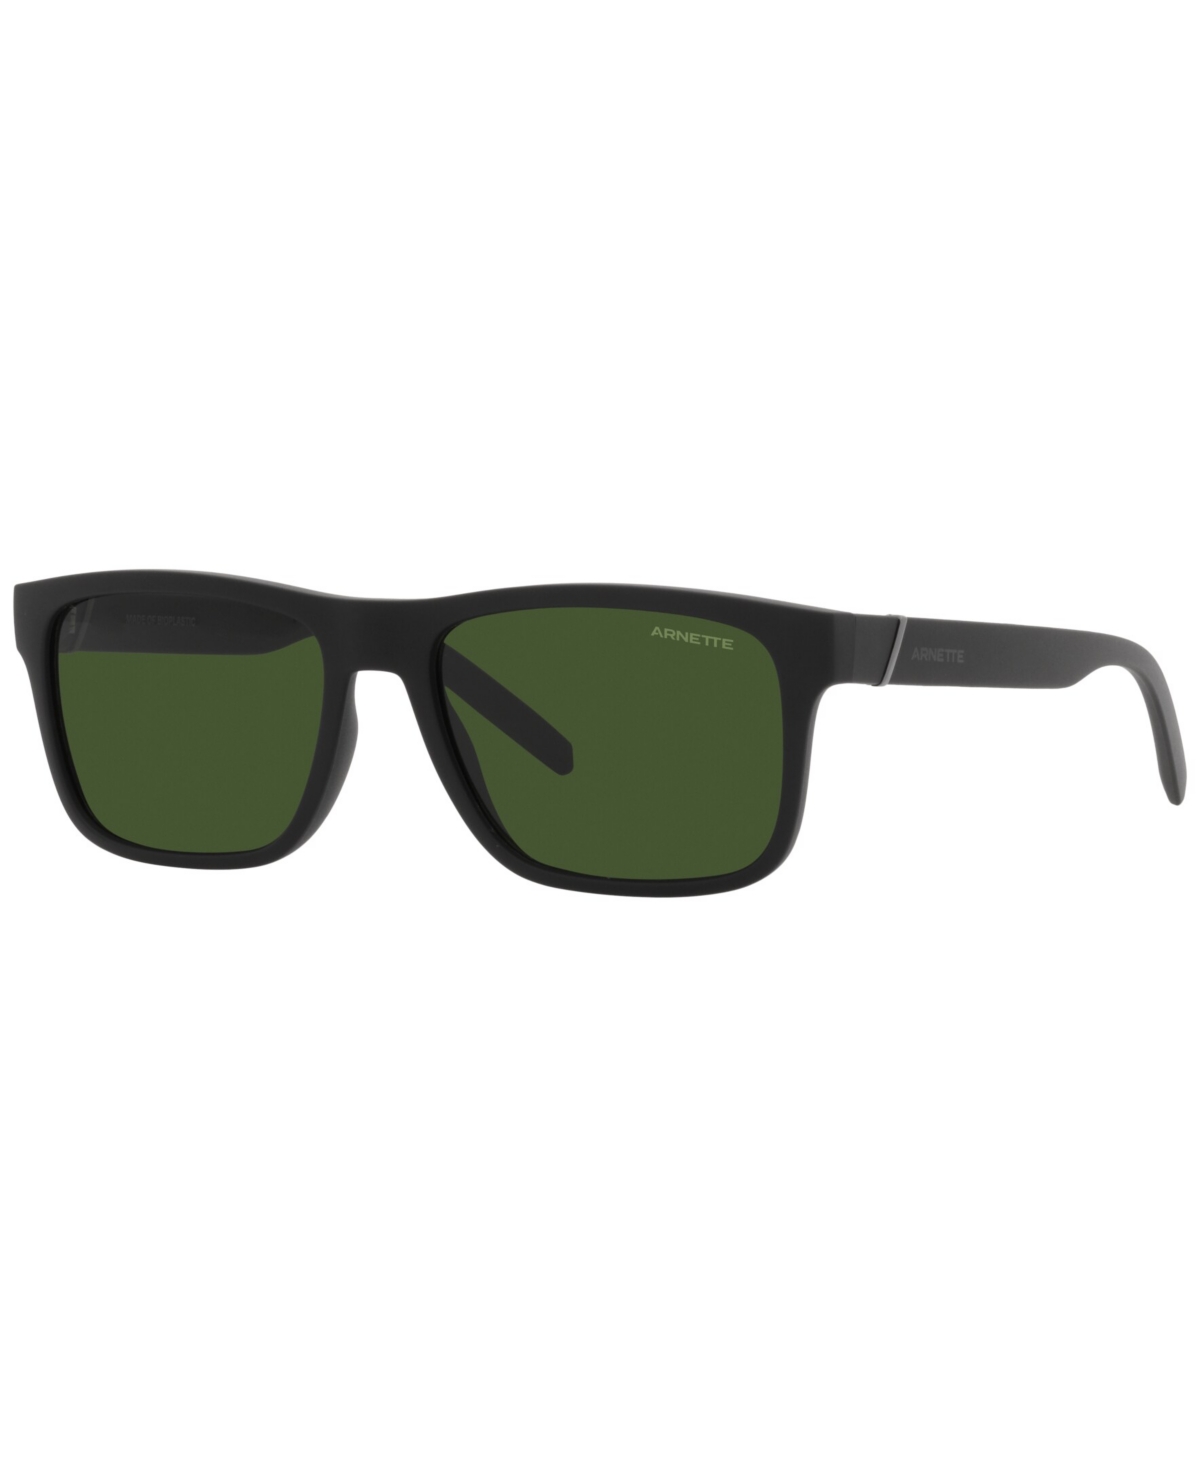 Unisex Sunglasses, AN4298 Bandra - Matte Black